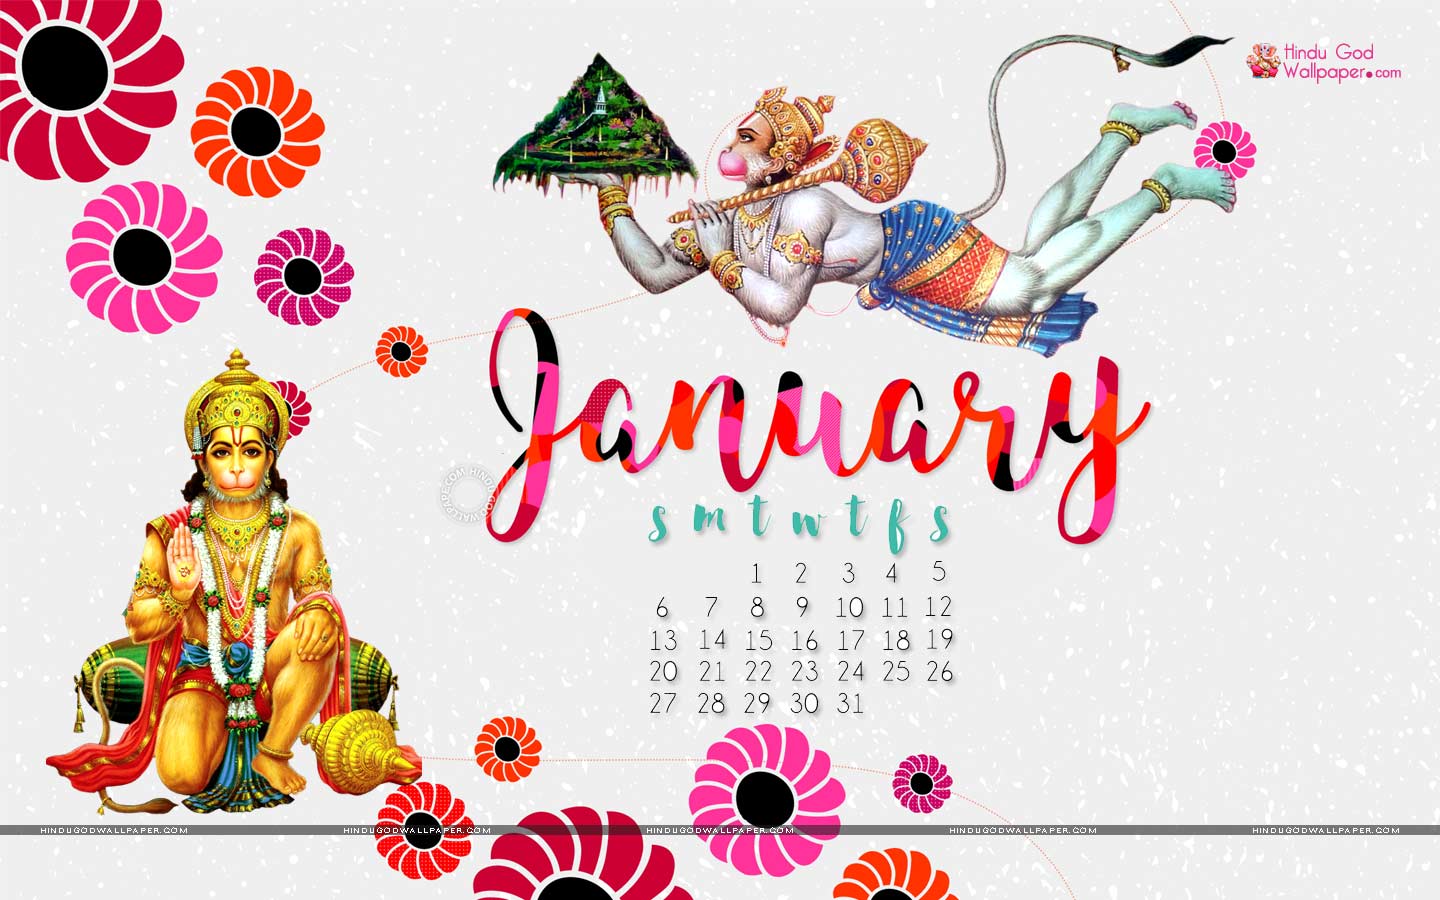 January 2019 Calendar Wallpaper for Desktop Background Free Download